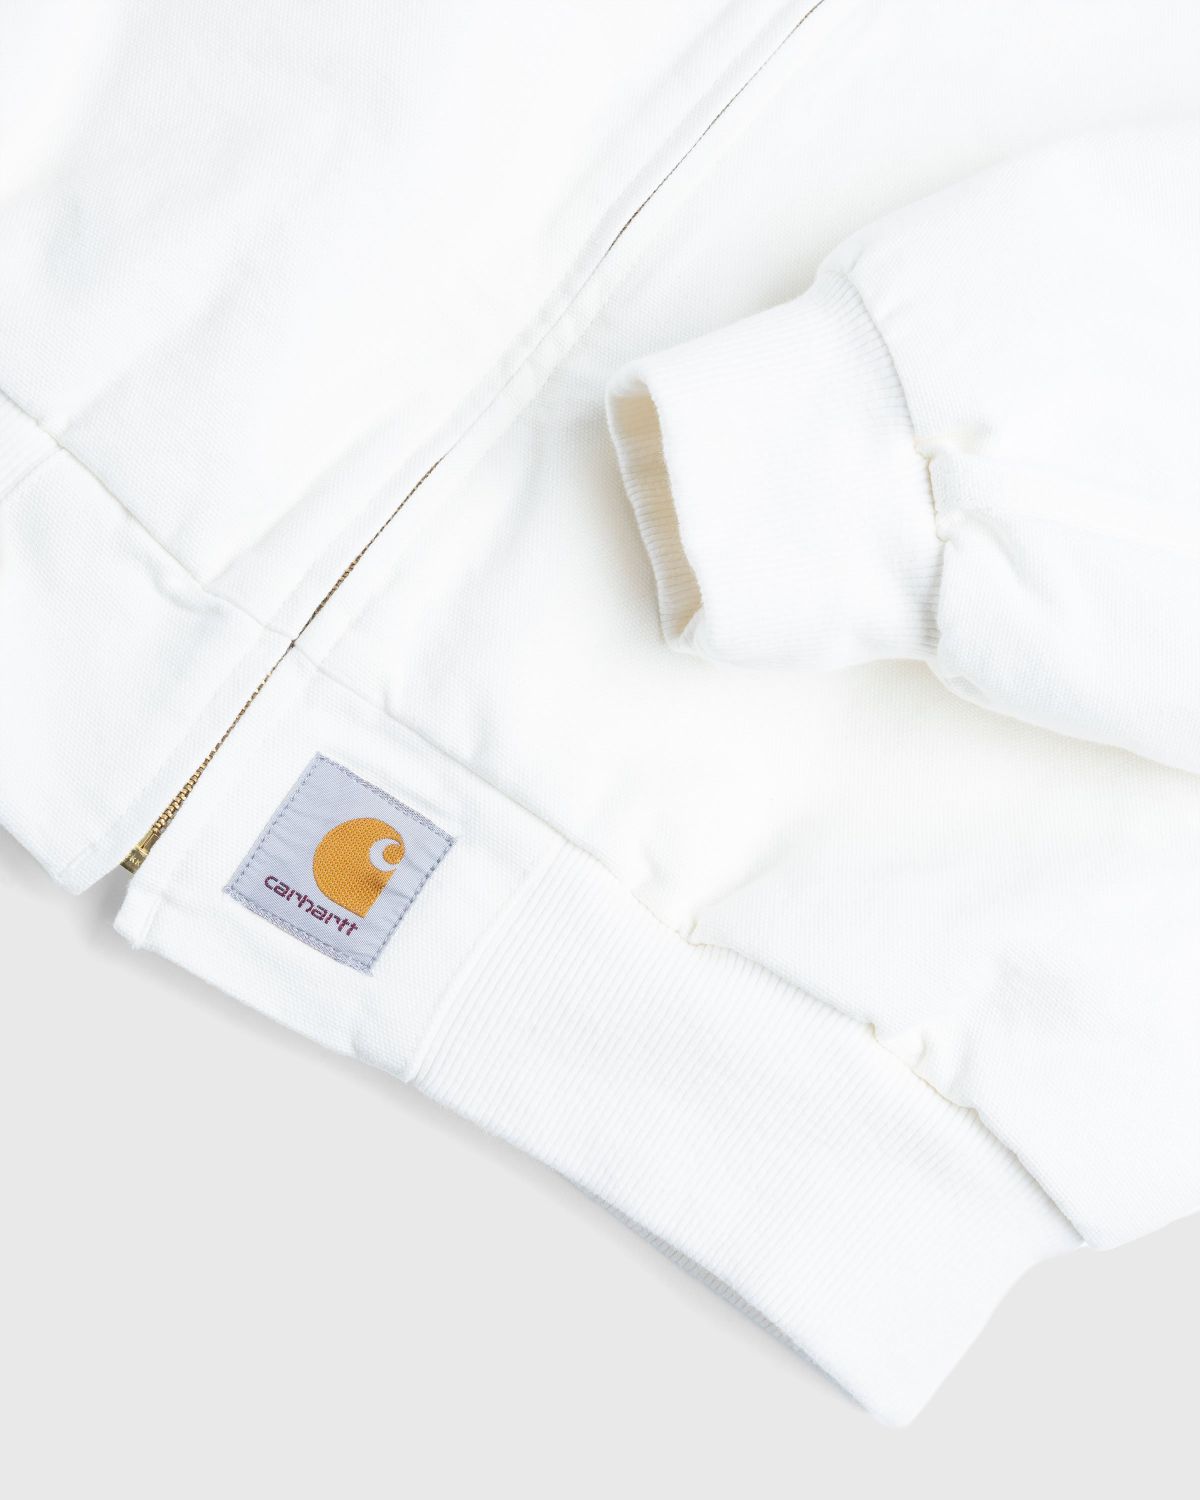 Carhartt WIP – OG Santa Fe Jacket Stonewashed Wax/Hamilton Brown - Outerwear - Beige - Image 5